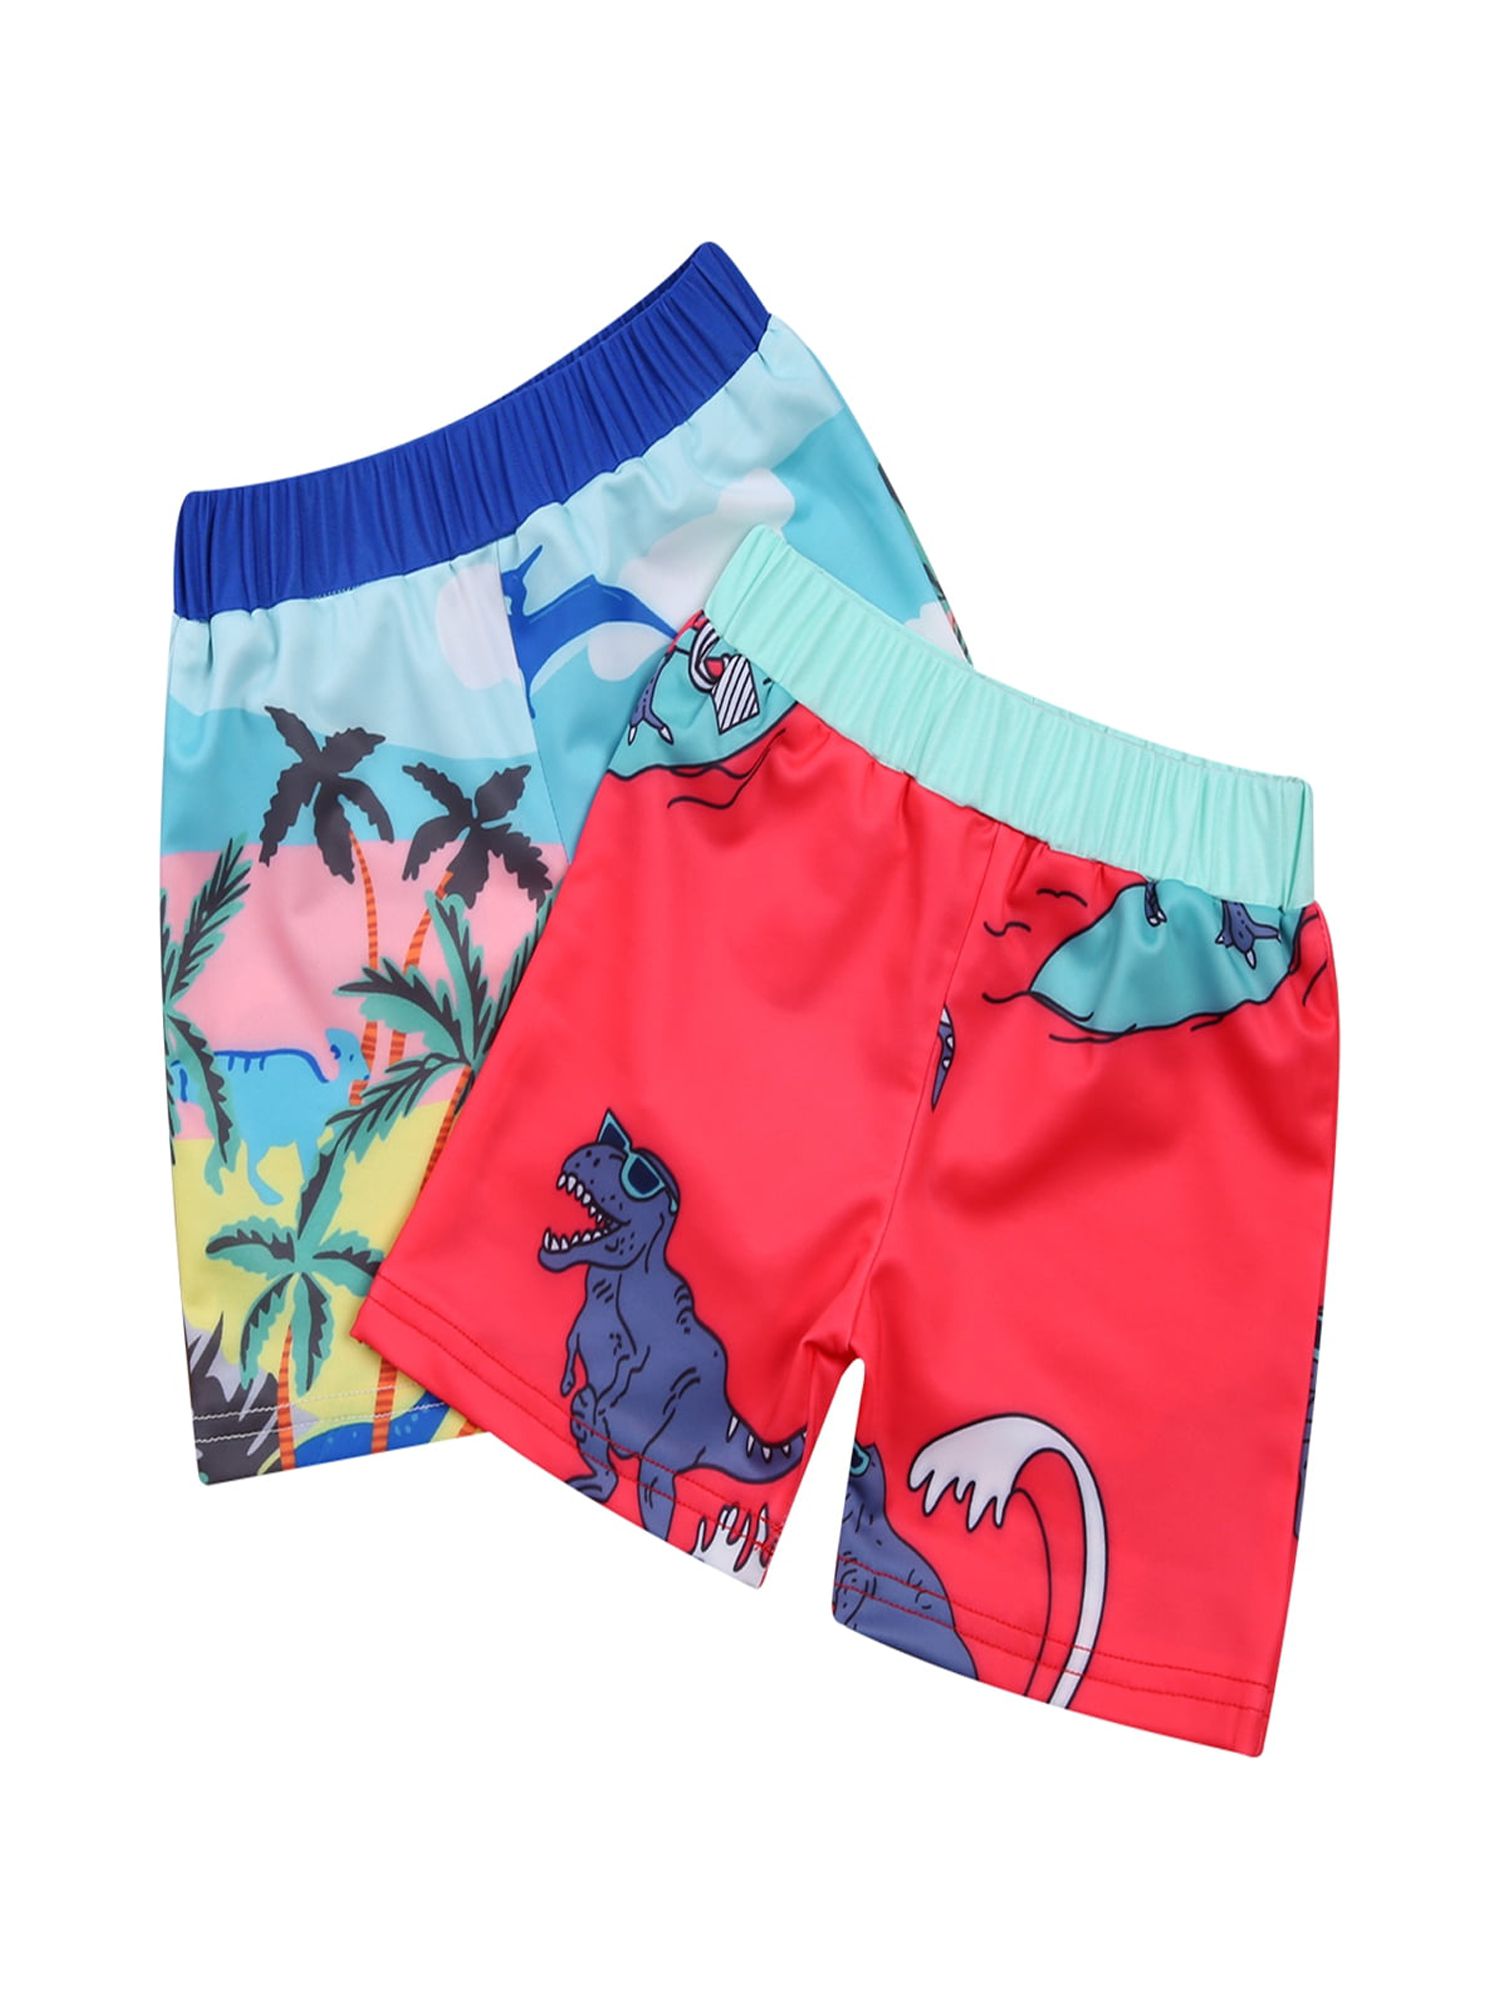 Binwwede Boys Swimwear Trunks Fish Printed Swim Shorts Toddler Baby Little Boy Summer Beach Swimsuits - image 3 of 6